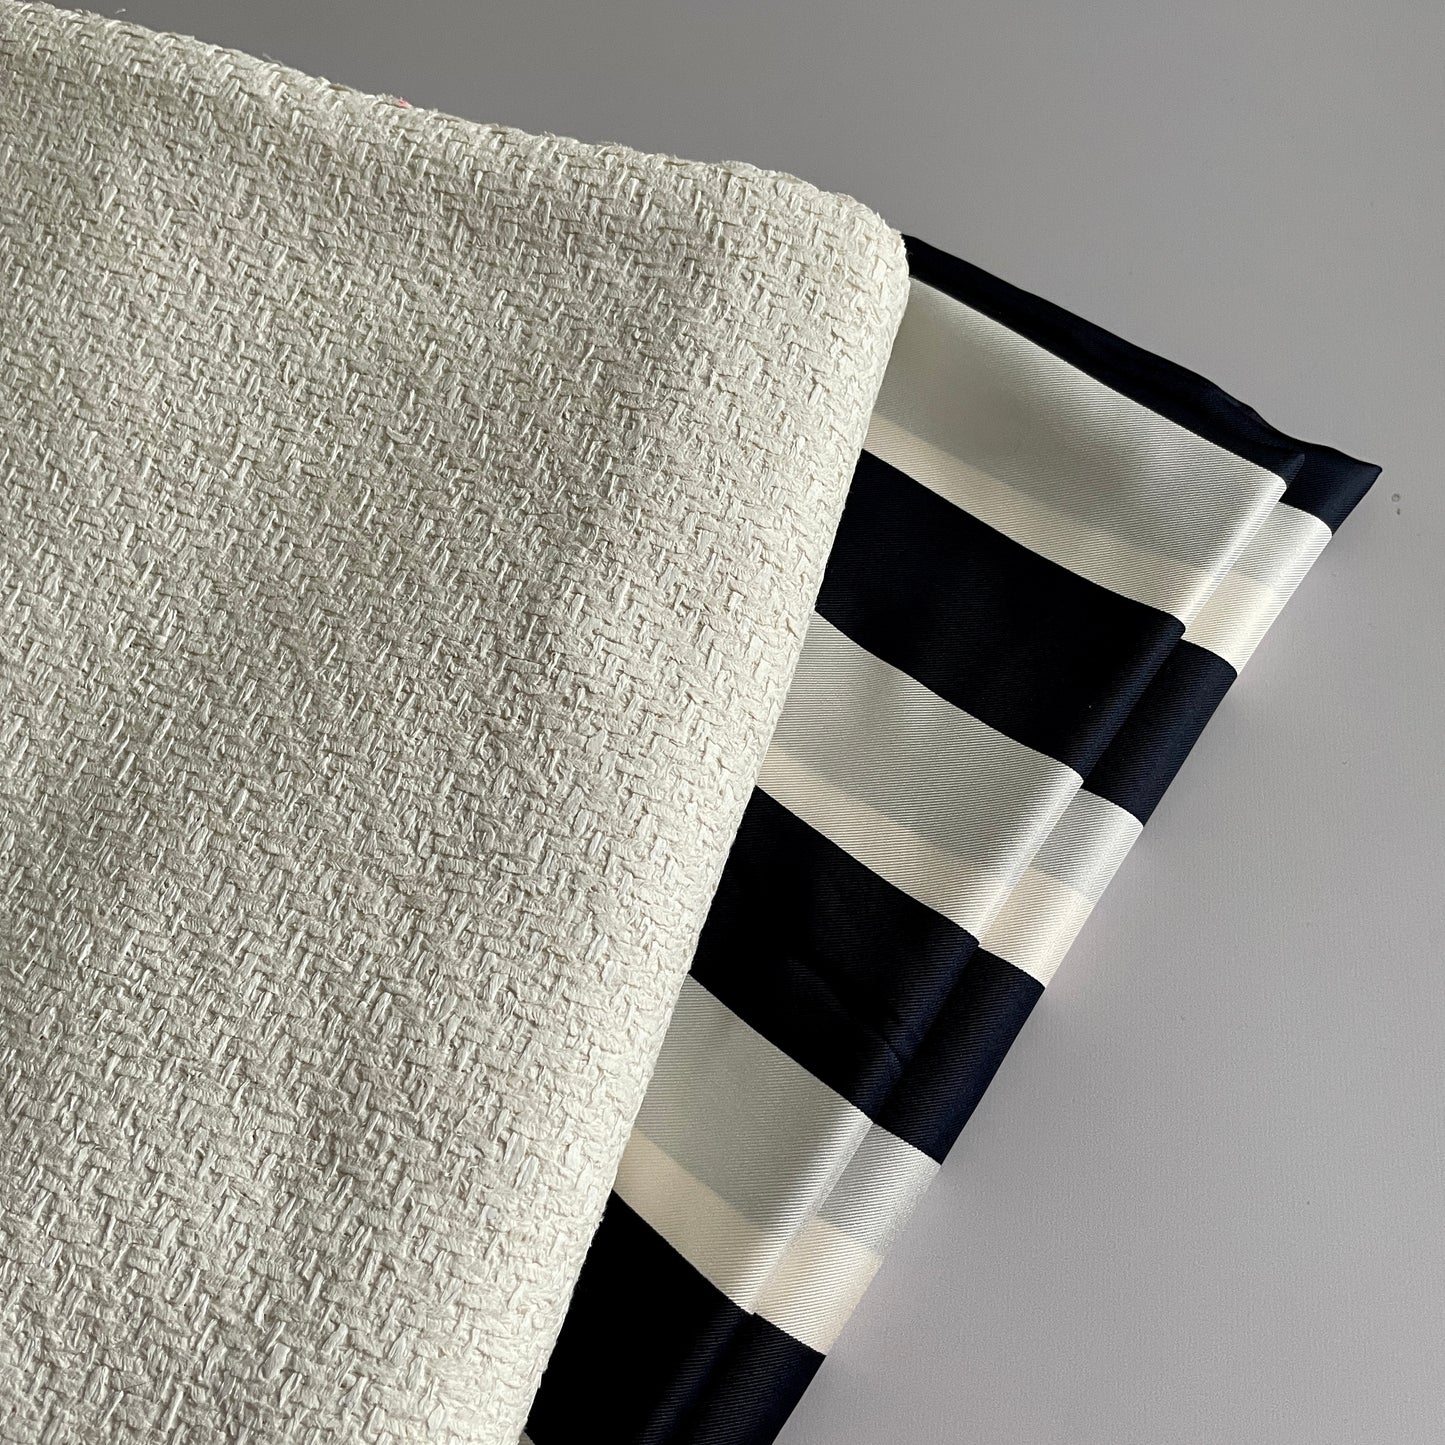 Tweed jacket fabric kit - Snowy stripes